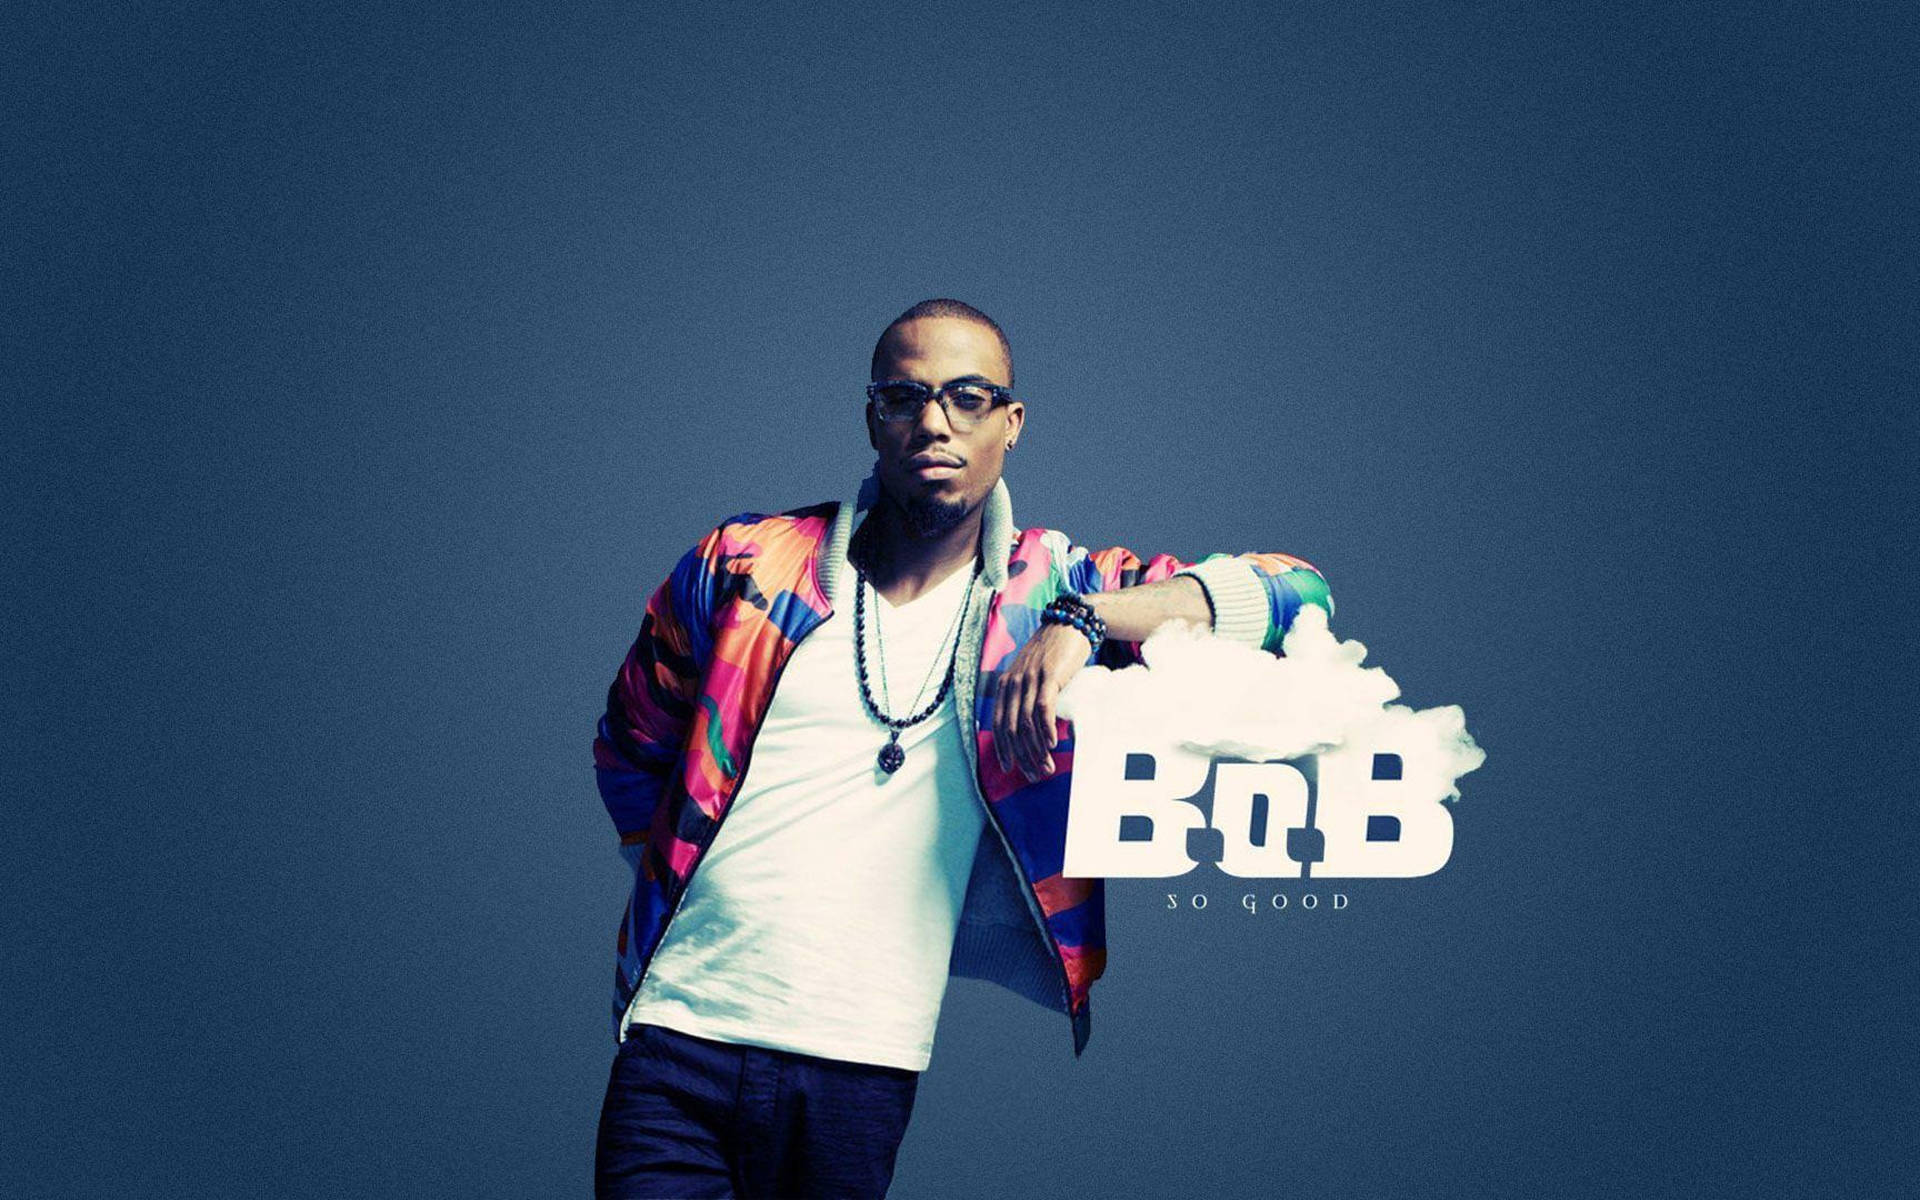 American Rapper B.o.b